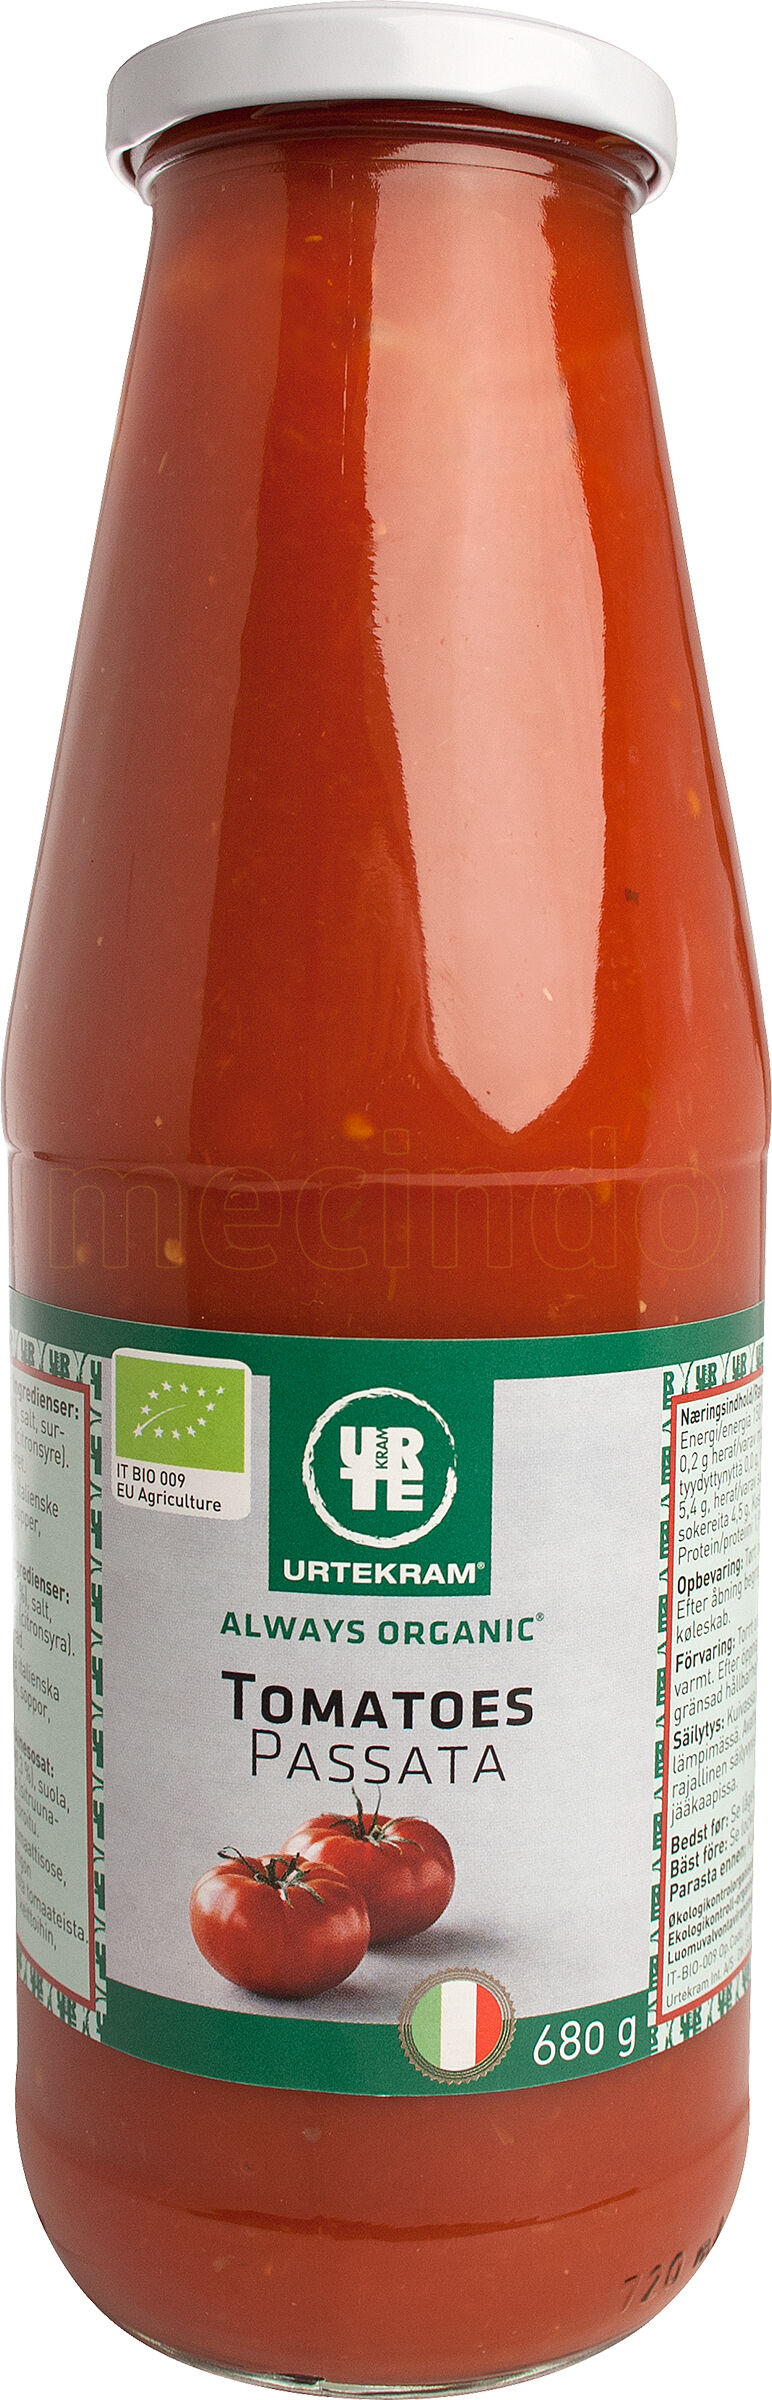 Urtekram Tomatoes Passata Ø - 680 g